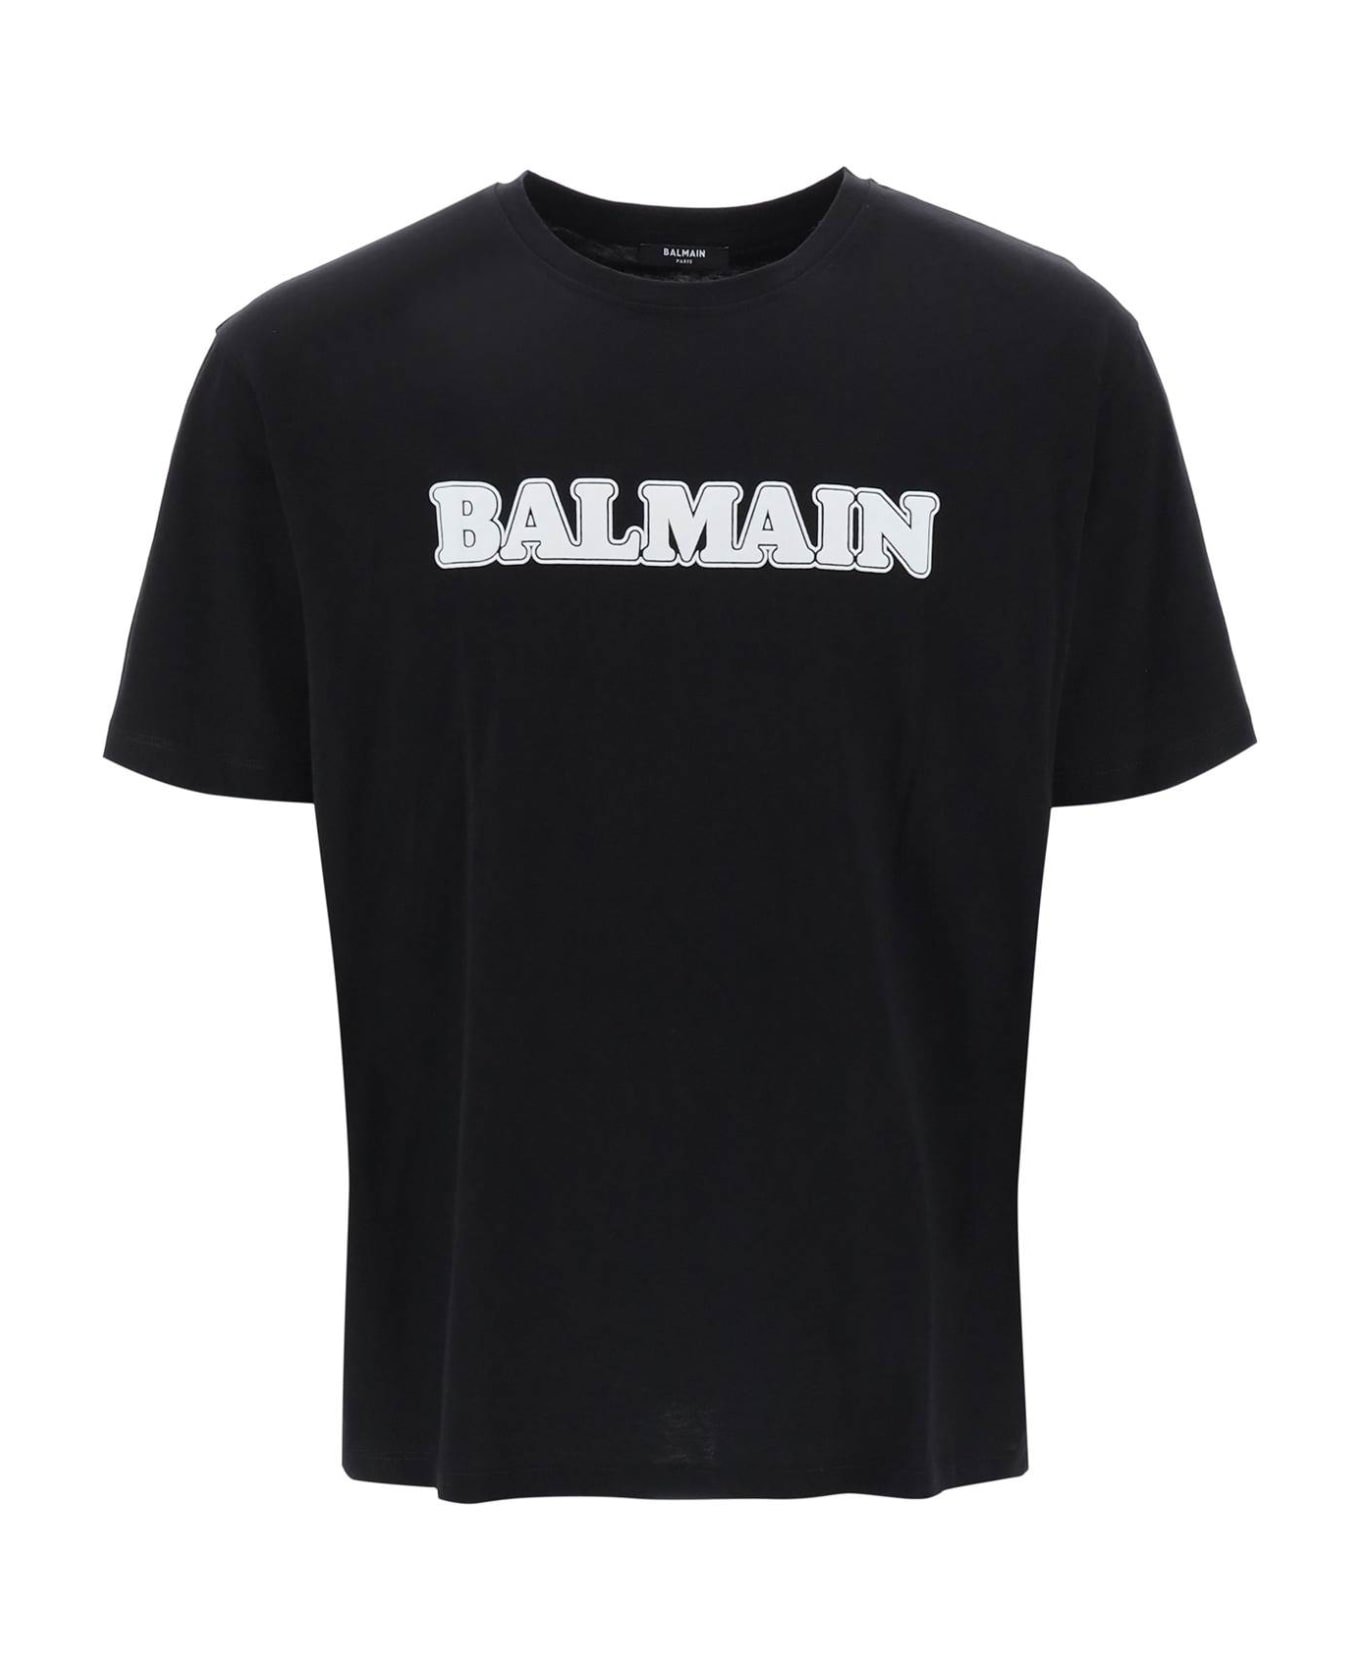 Balmain Retro Flock T-shirt - NOIR BLANC (Black) シャツ